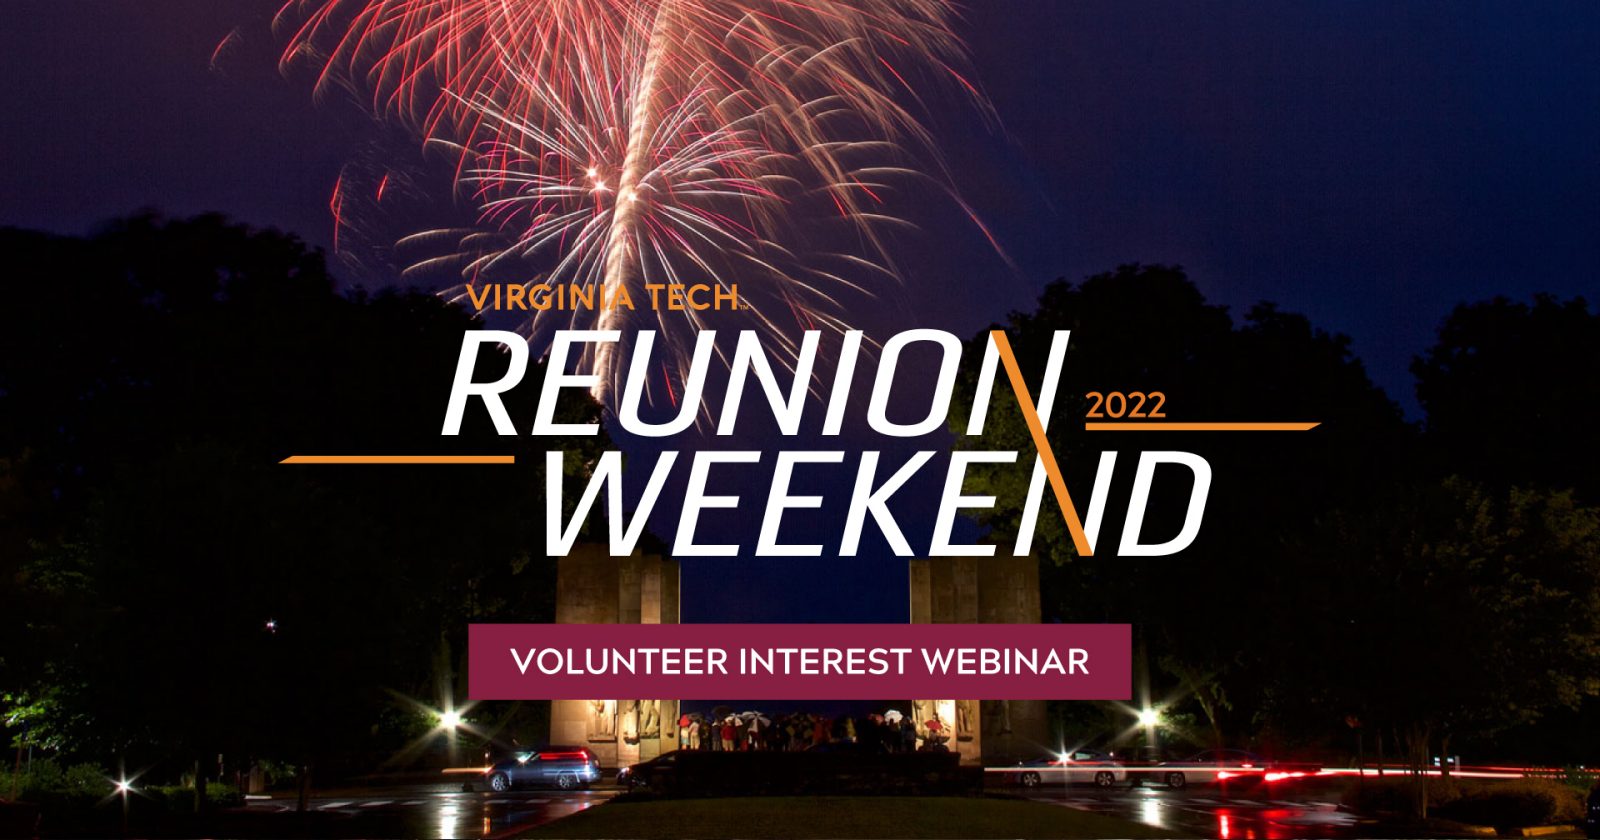 Reunion Weekend Webinar Alumni Relations Virginia Tech